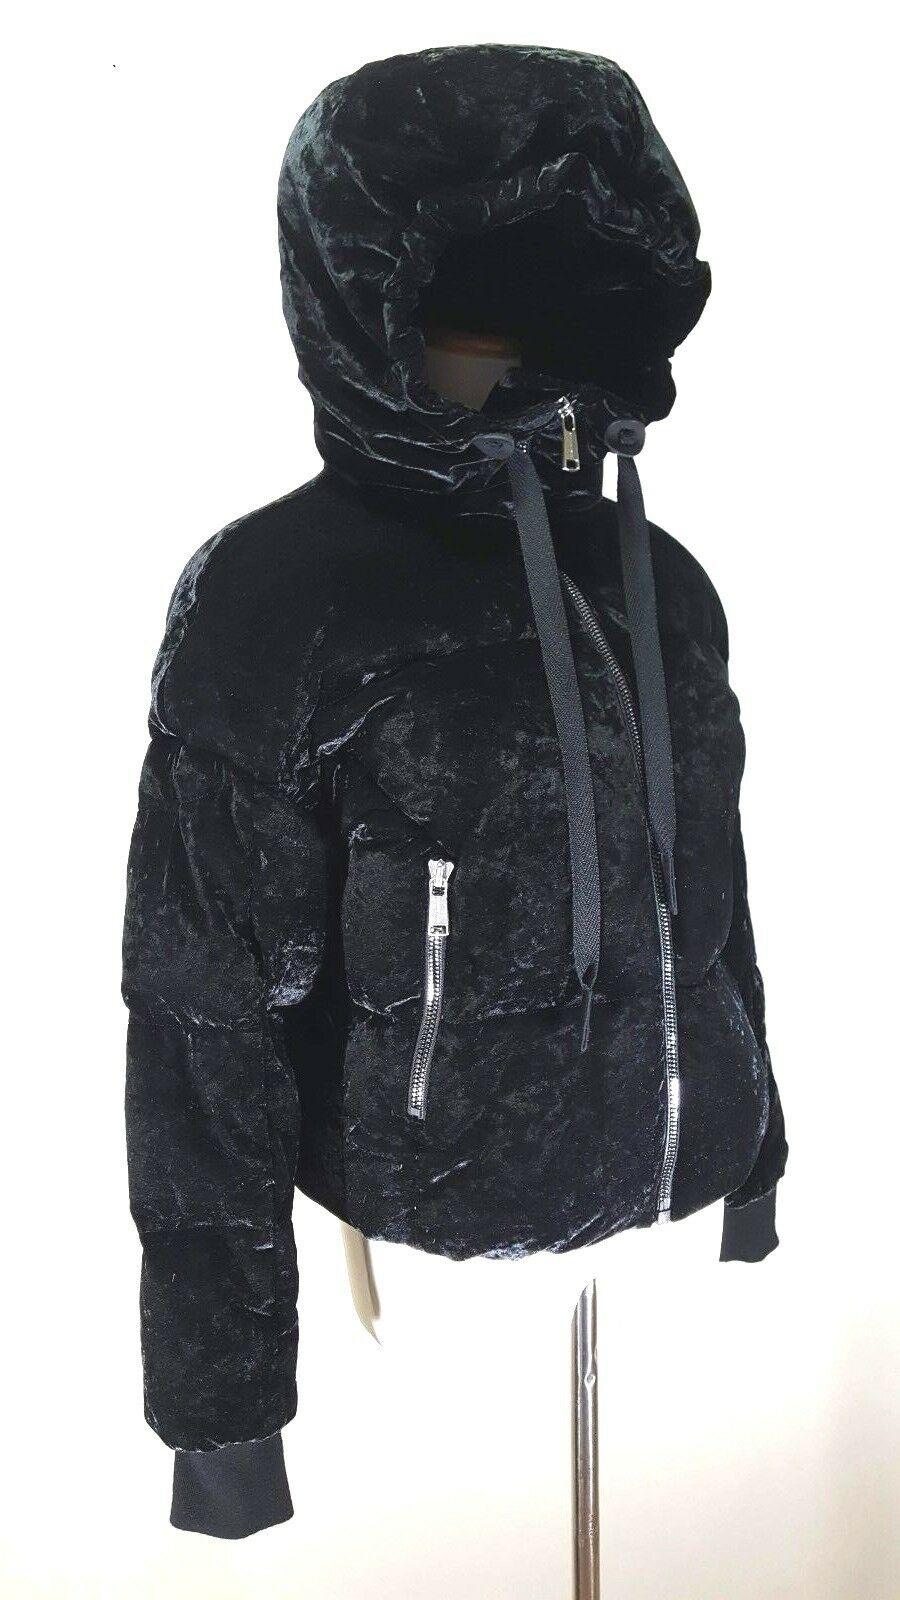 Andrew Marc Women's Black Velvet Down Jacket Puffer With Hood  Size S - SVNYFancy